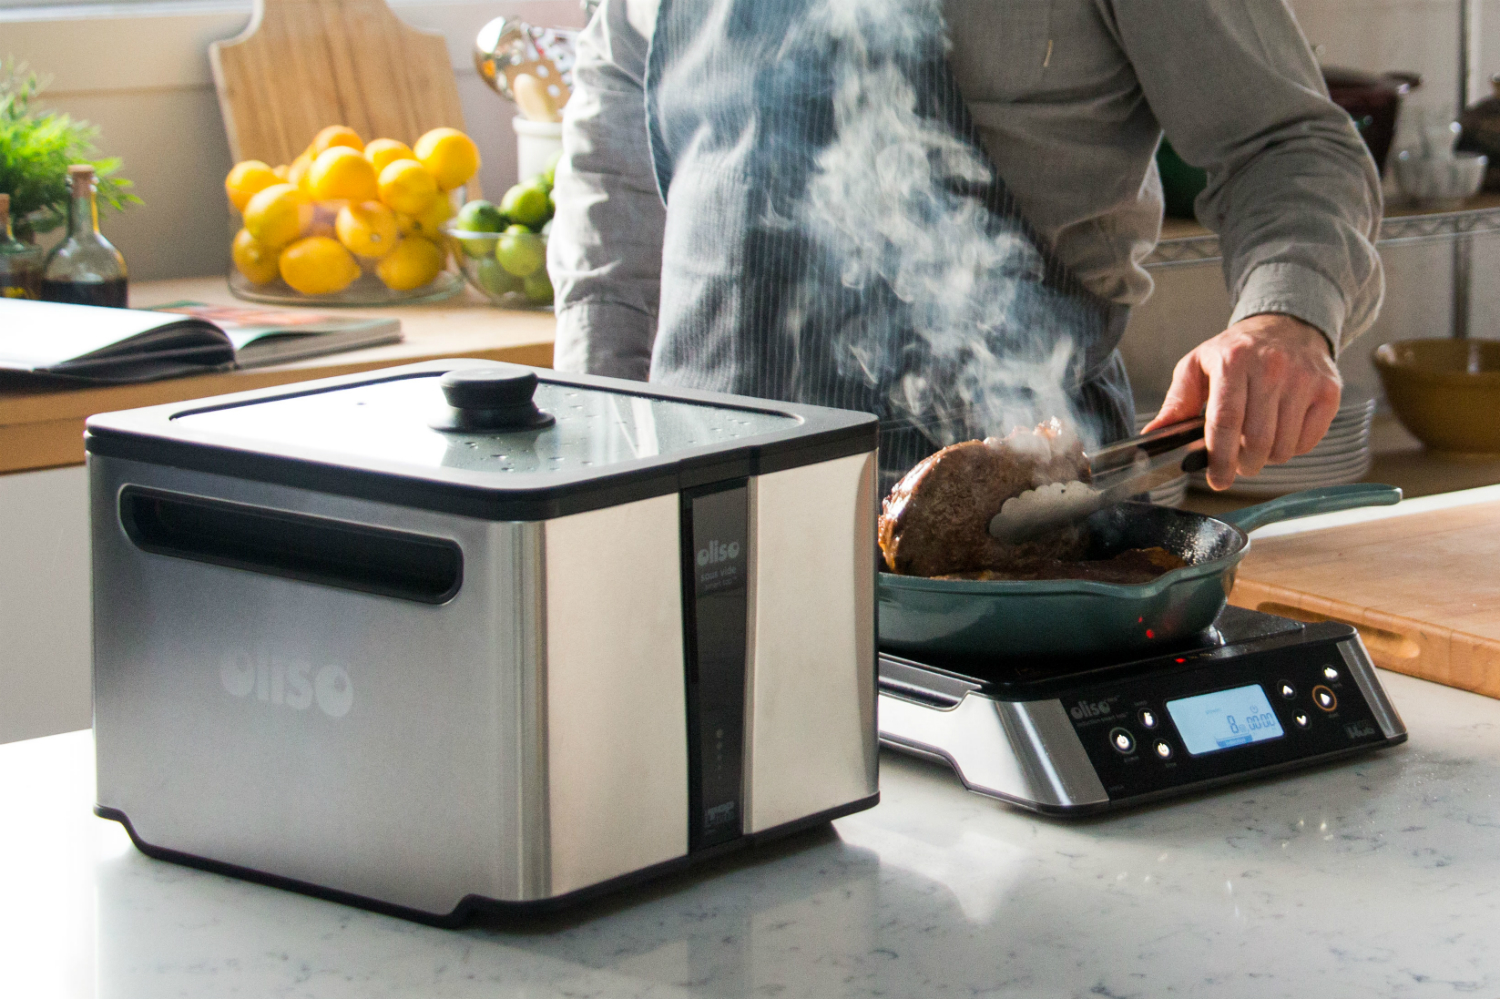 oliso smarthub sous vide induction cooktop